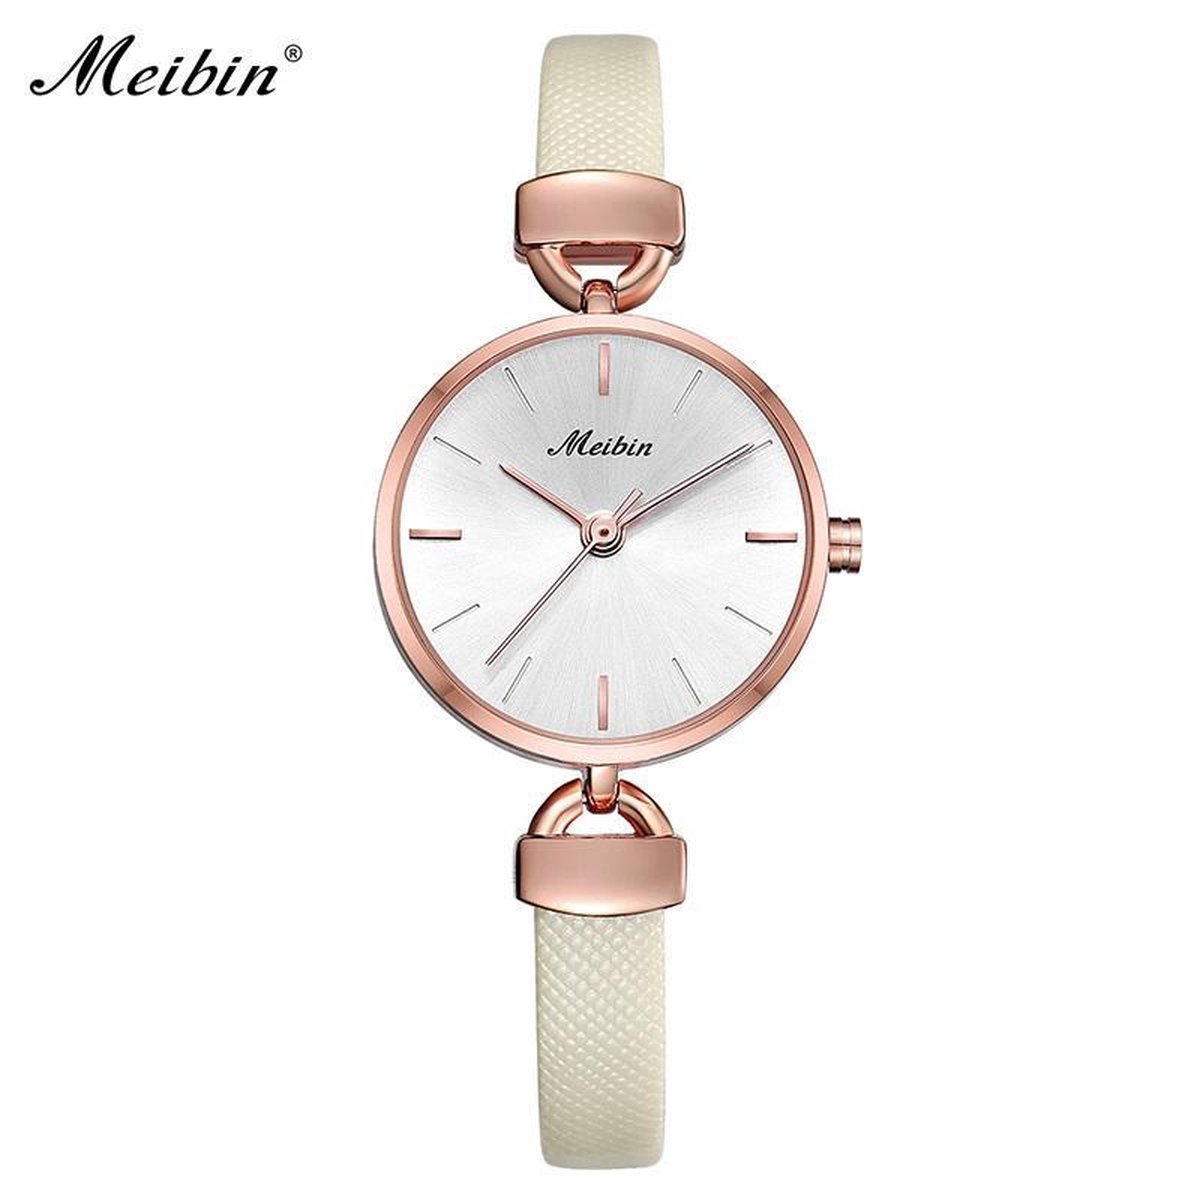 Longbo - Meibin - Dames Horloge - Creme/Rosé/Zilver - 28mm (Productvideo)